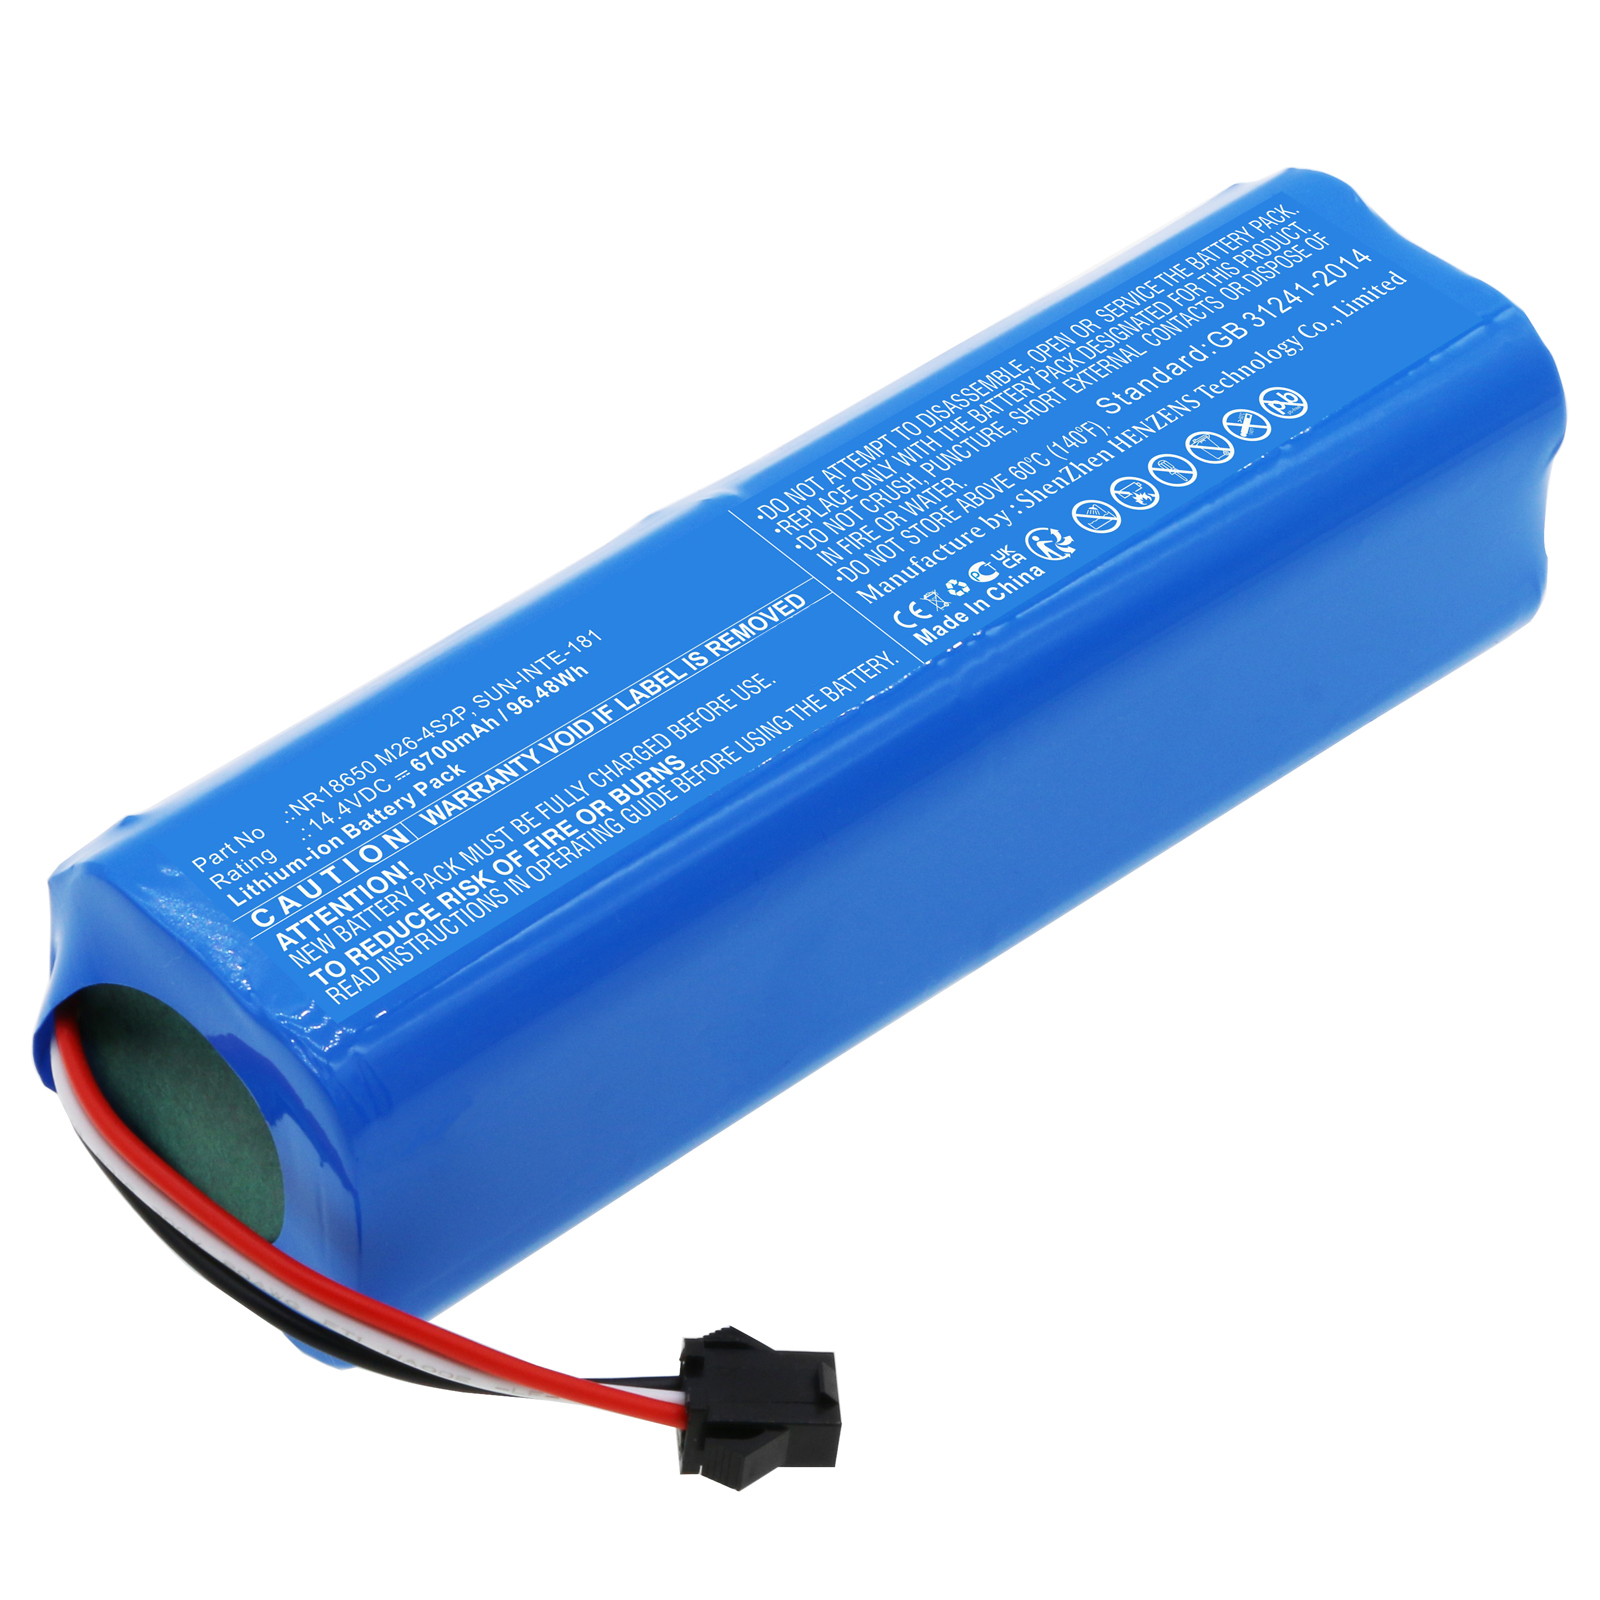 Synergy Digital Vacuum Cleaner Battery, Compatible with Proscenic NR18650 M26-4S2P Vacuum Cleaner Battery (Li-ion, 14.4V, 6700mAh)